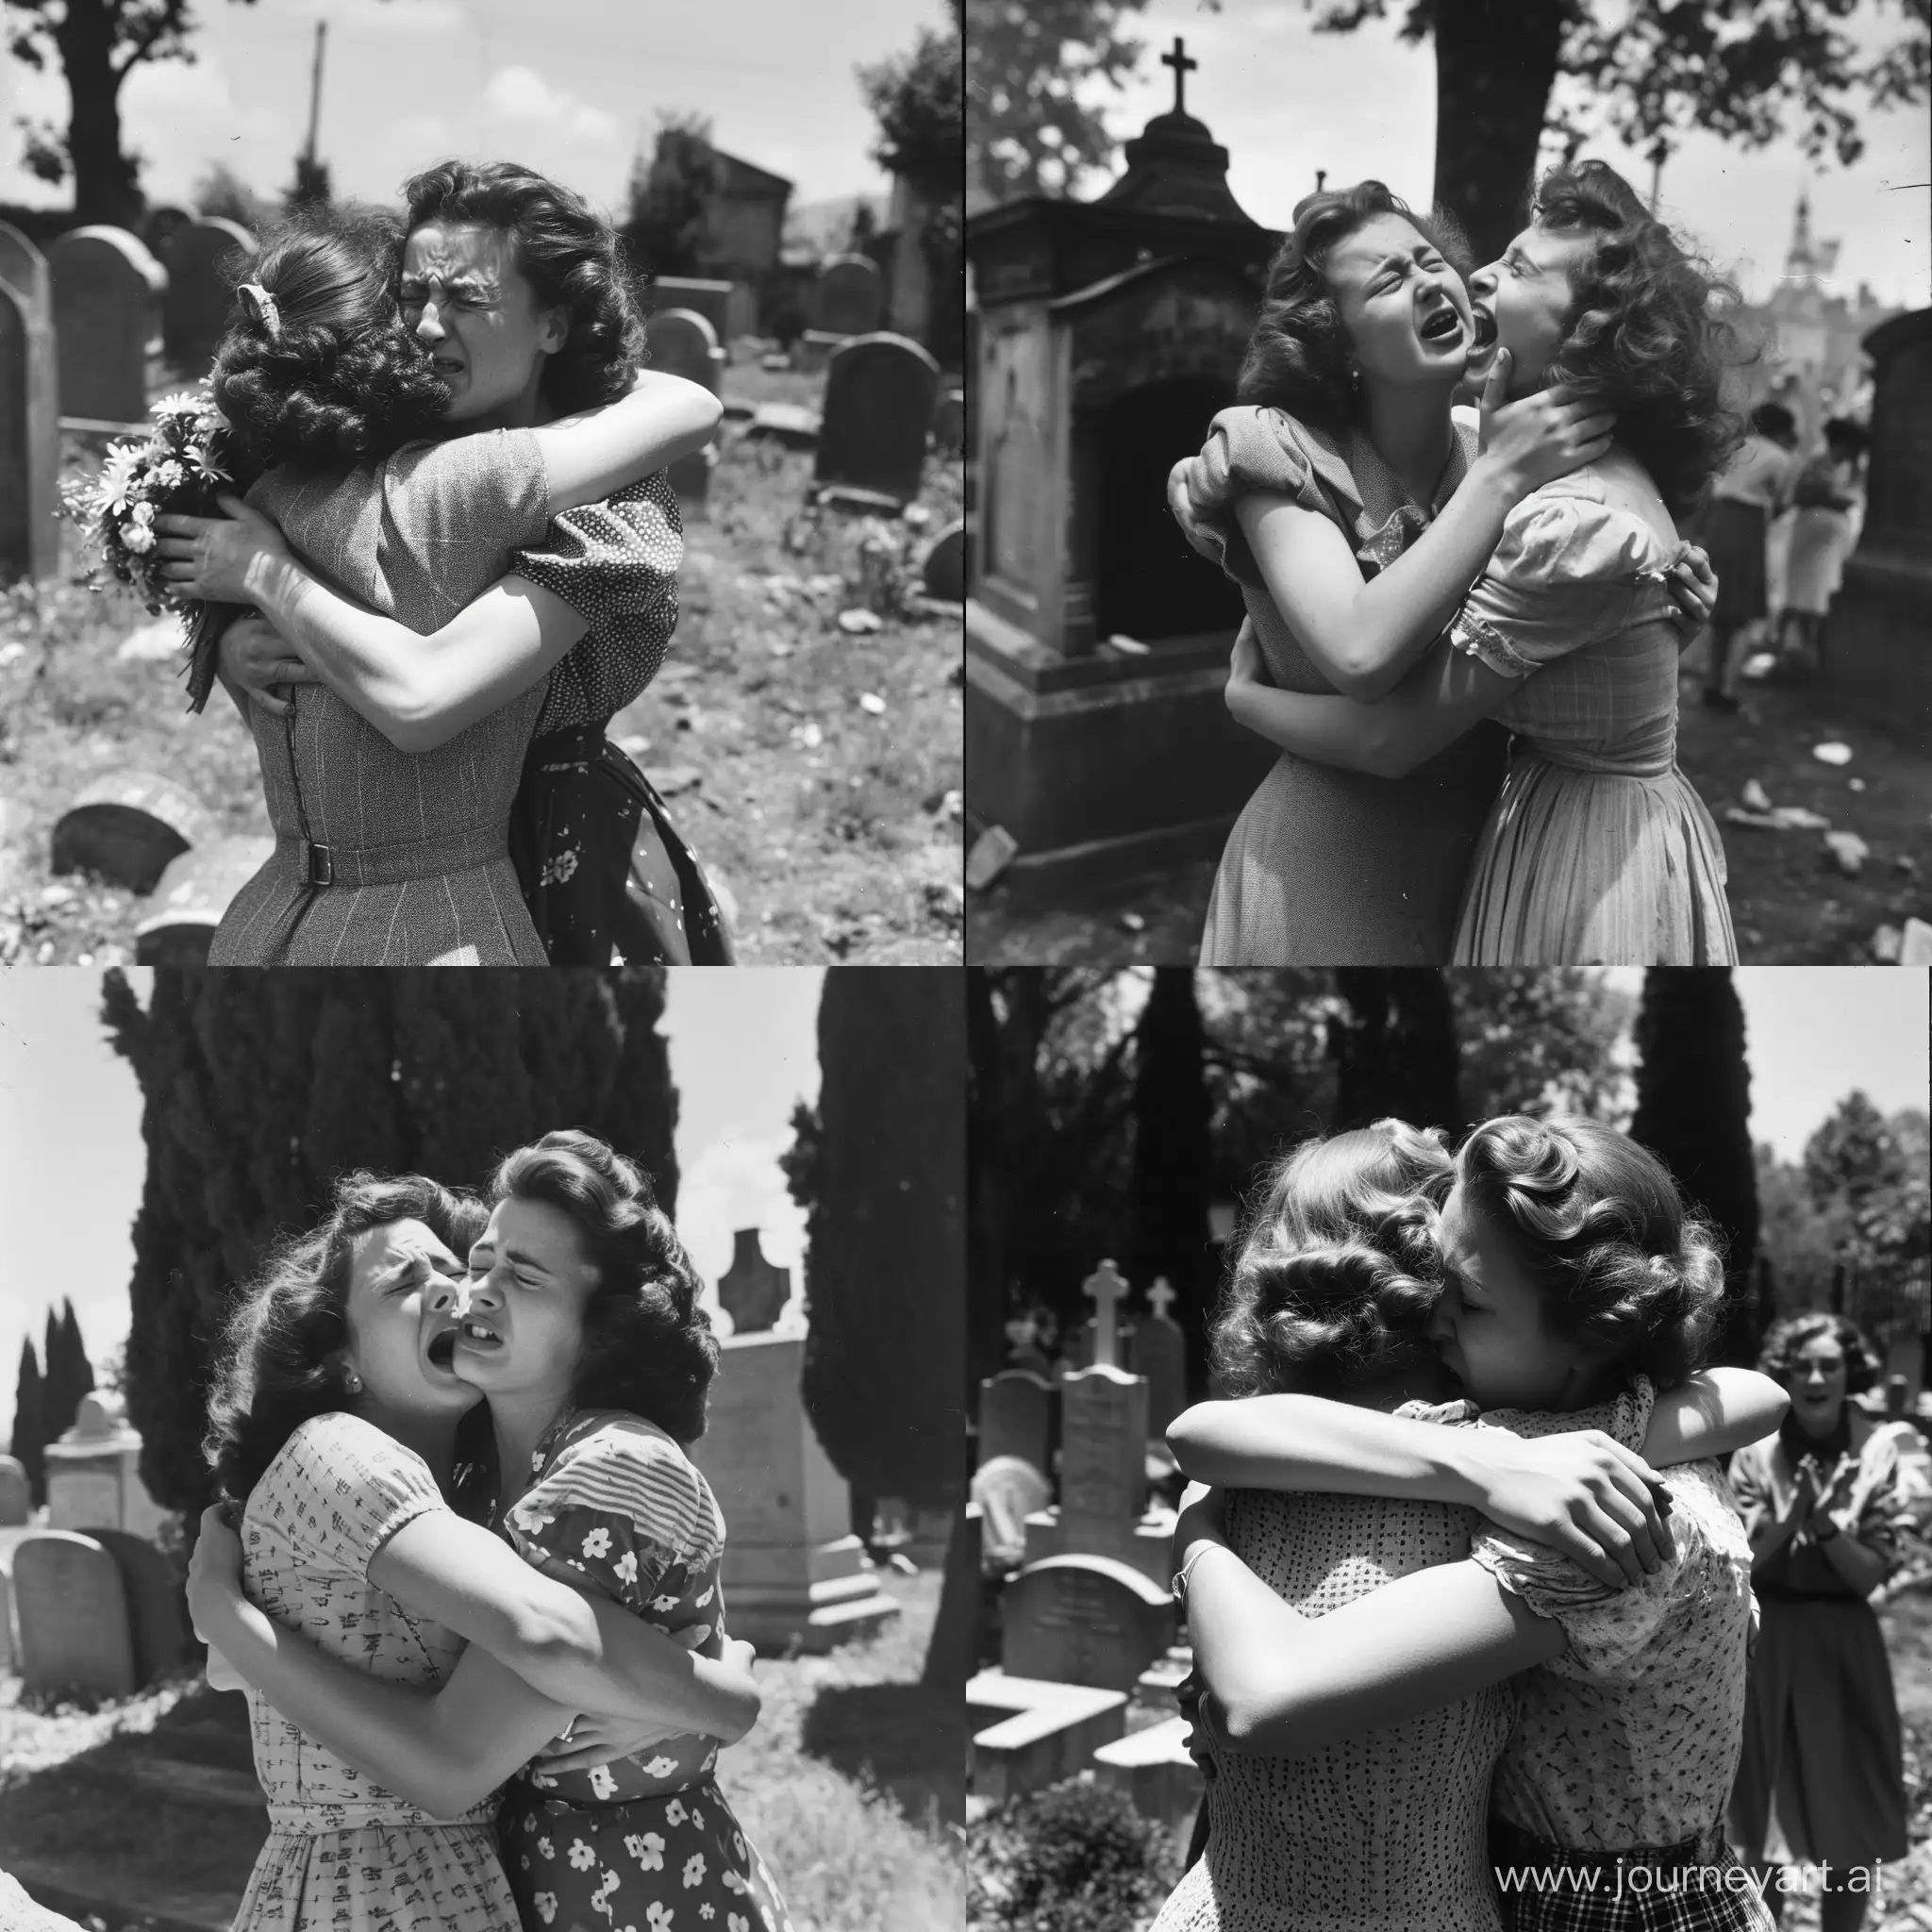 Emotional-Moment-European-Lesbian-Friends-in-1950s-Cemetery